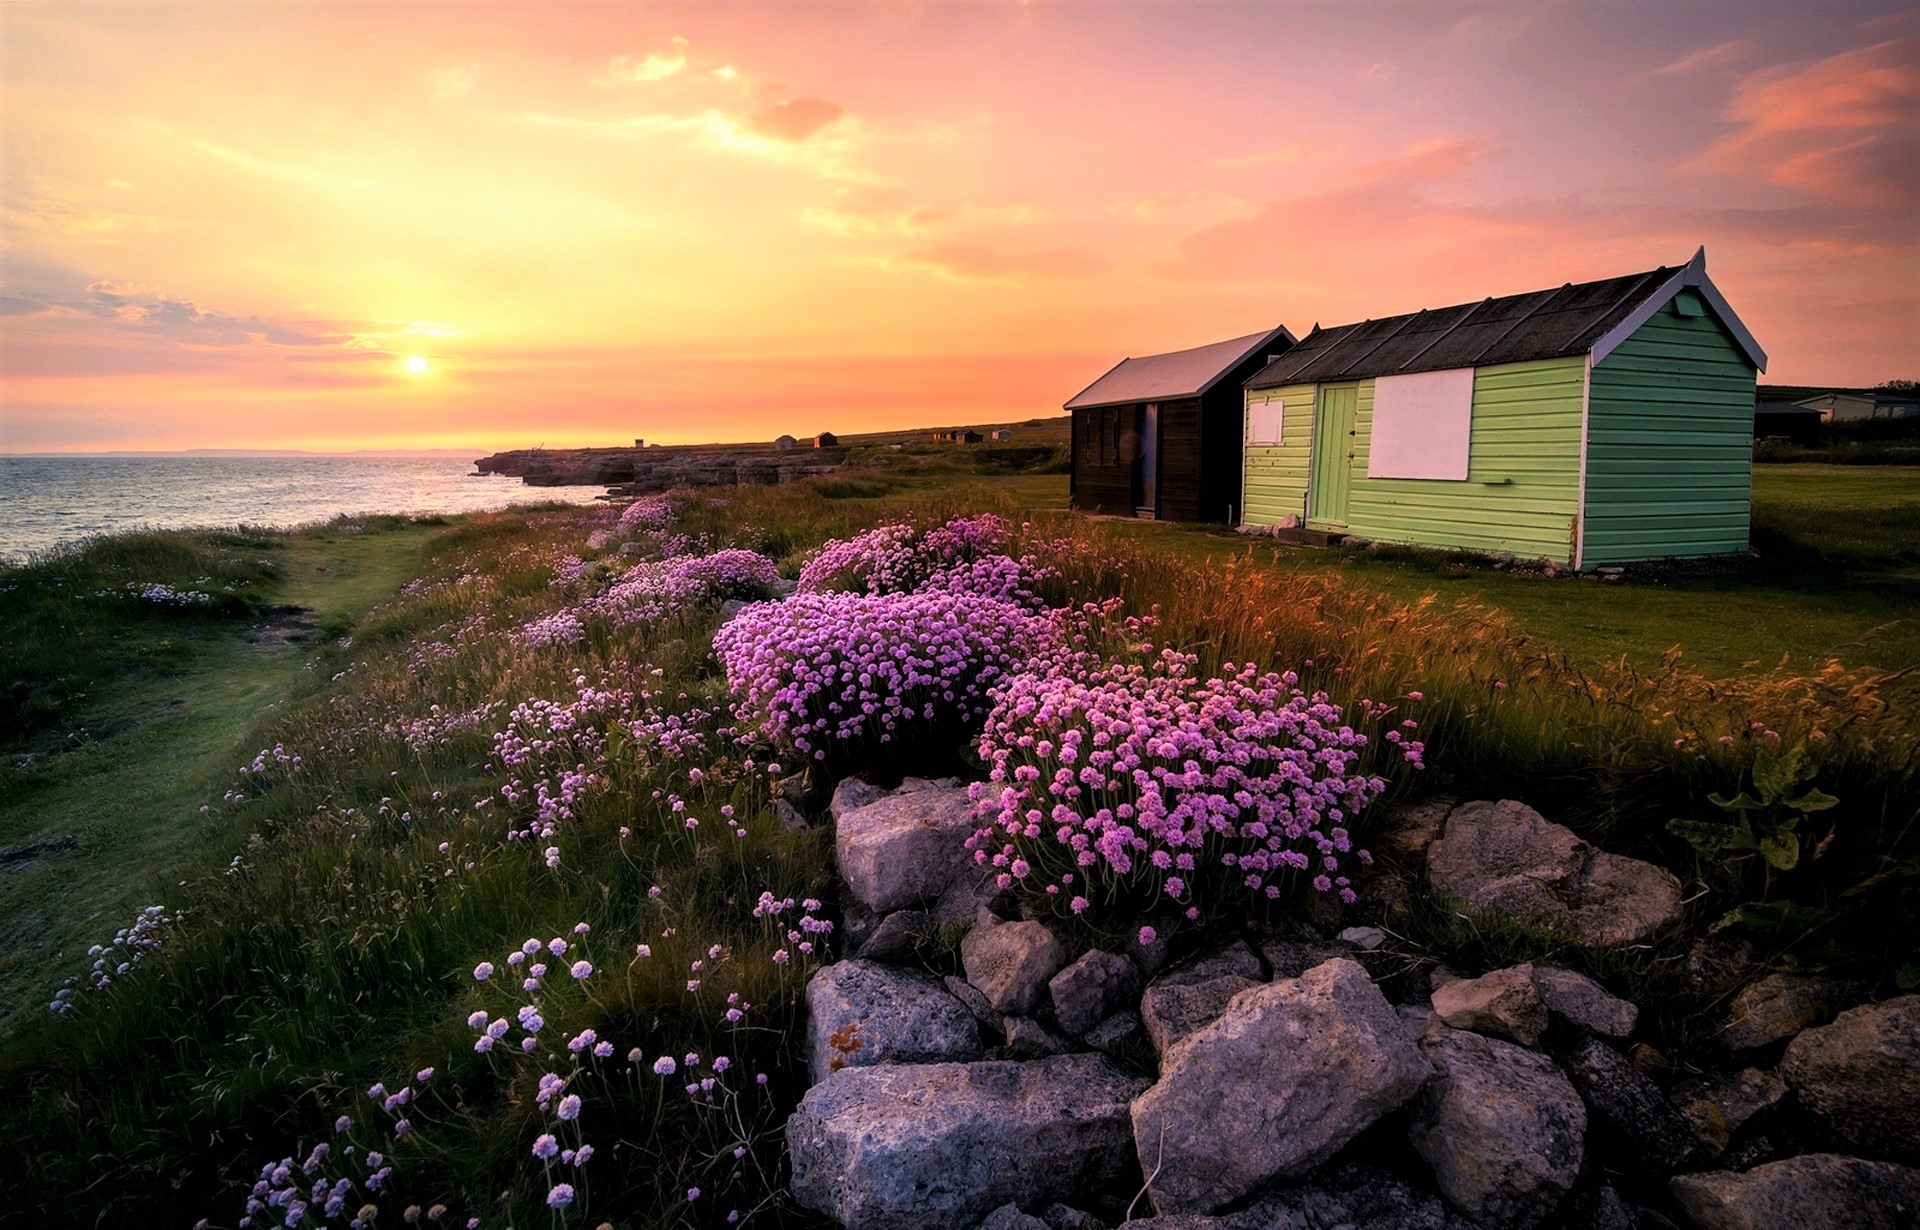 man made, shed, coast, flower, lake, purple flower, sunset